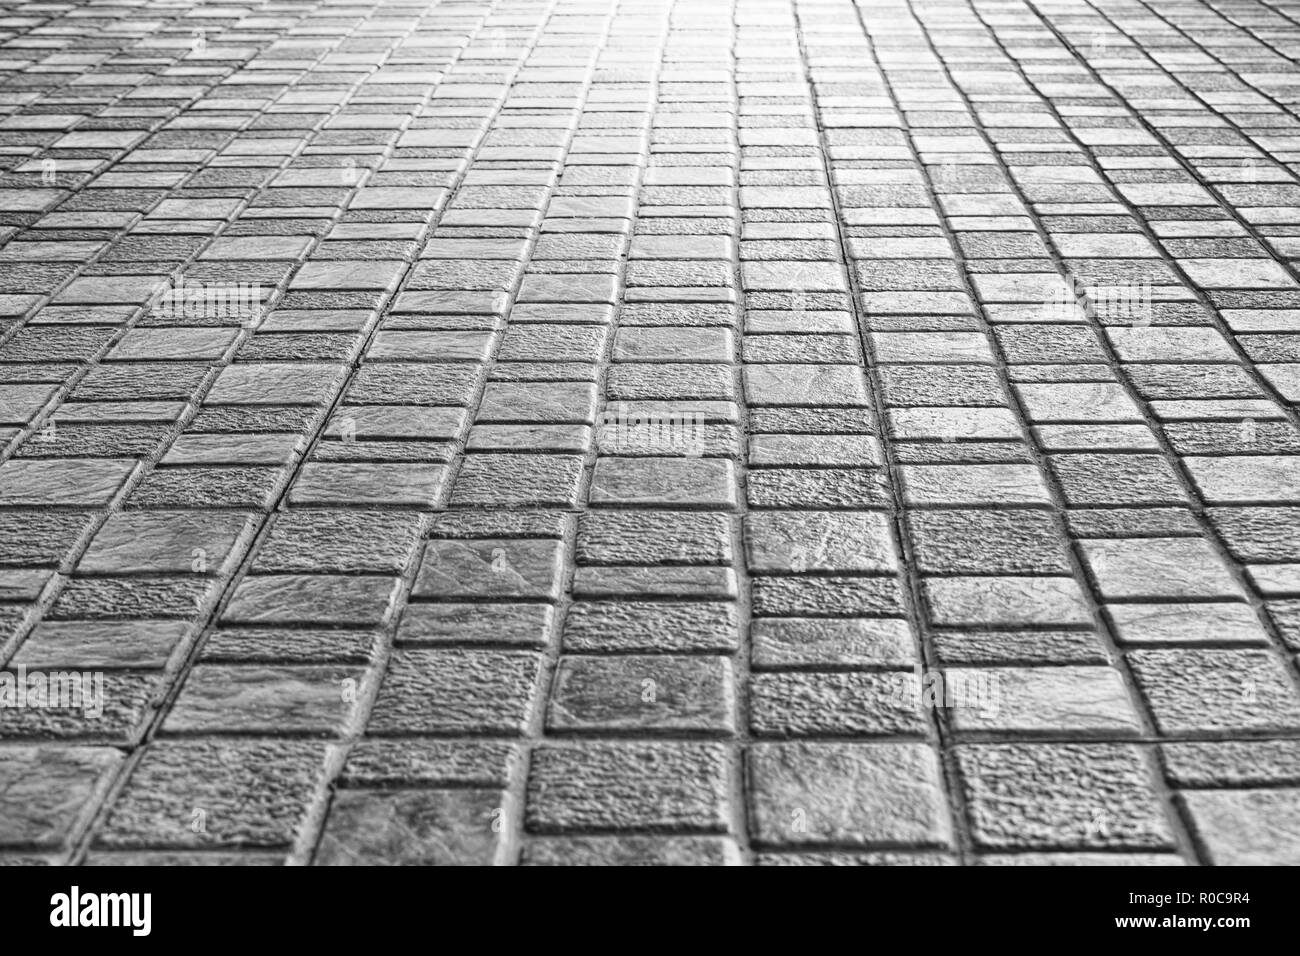 Close up tiles floor sidewalk for exterior street walk background Stock Photo